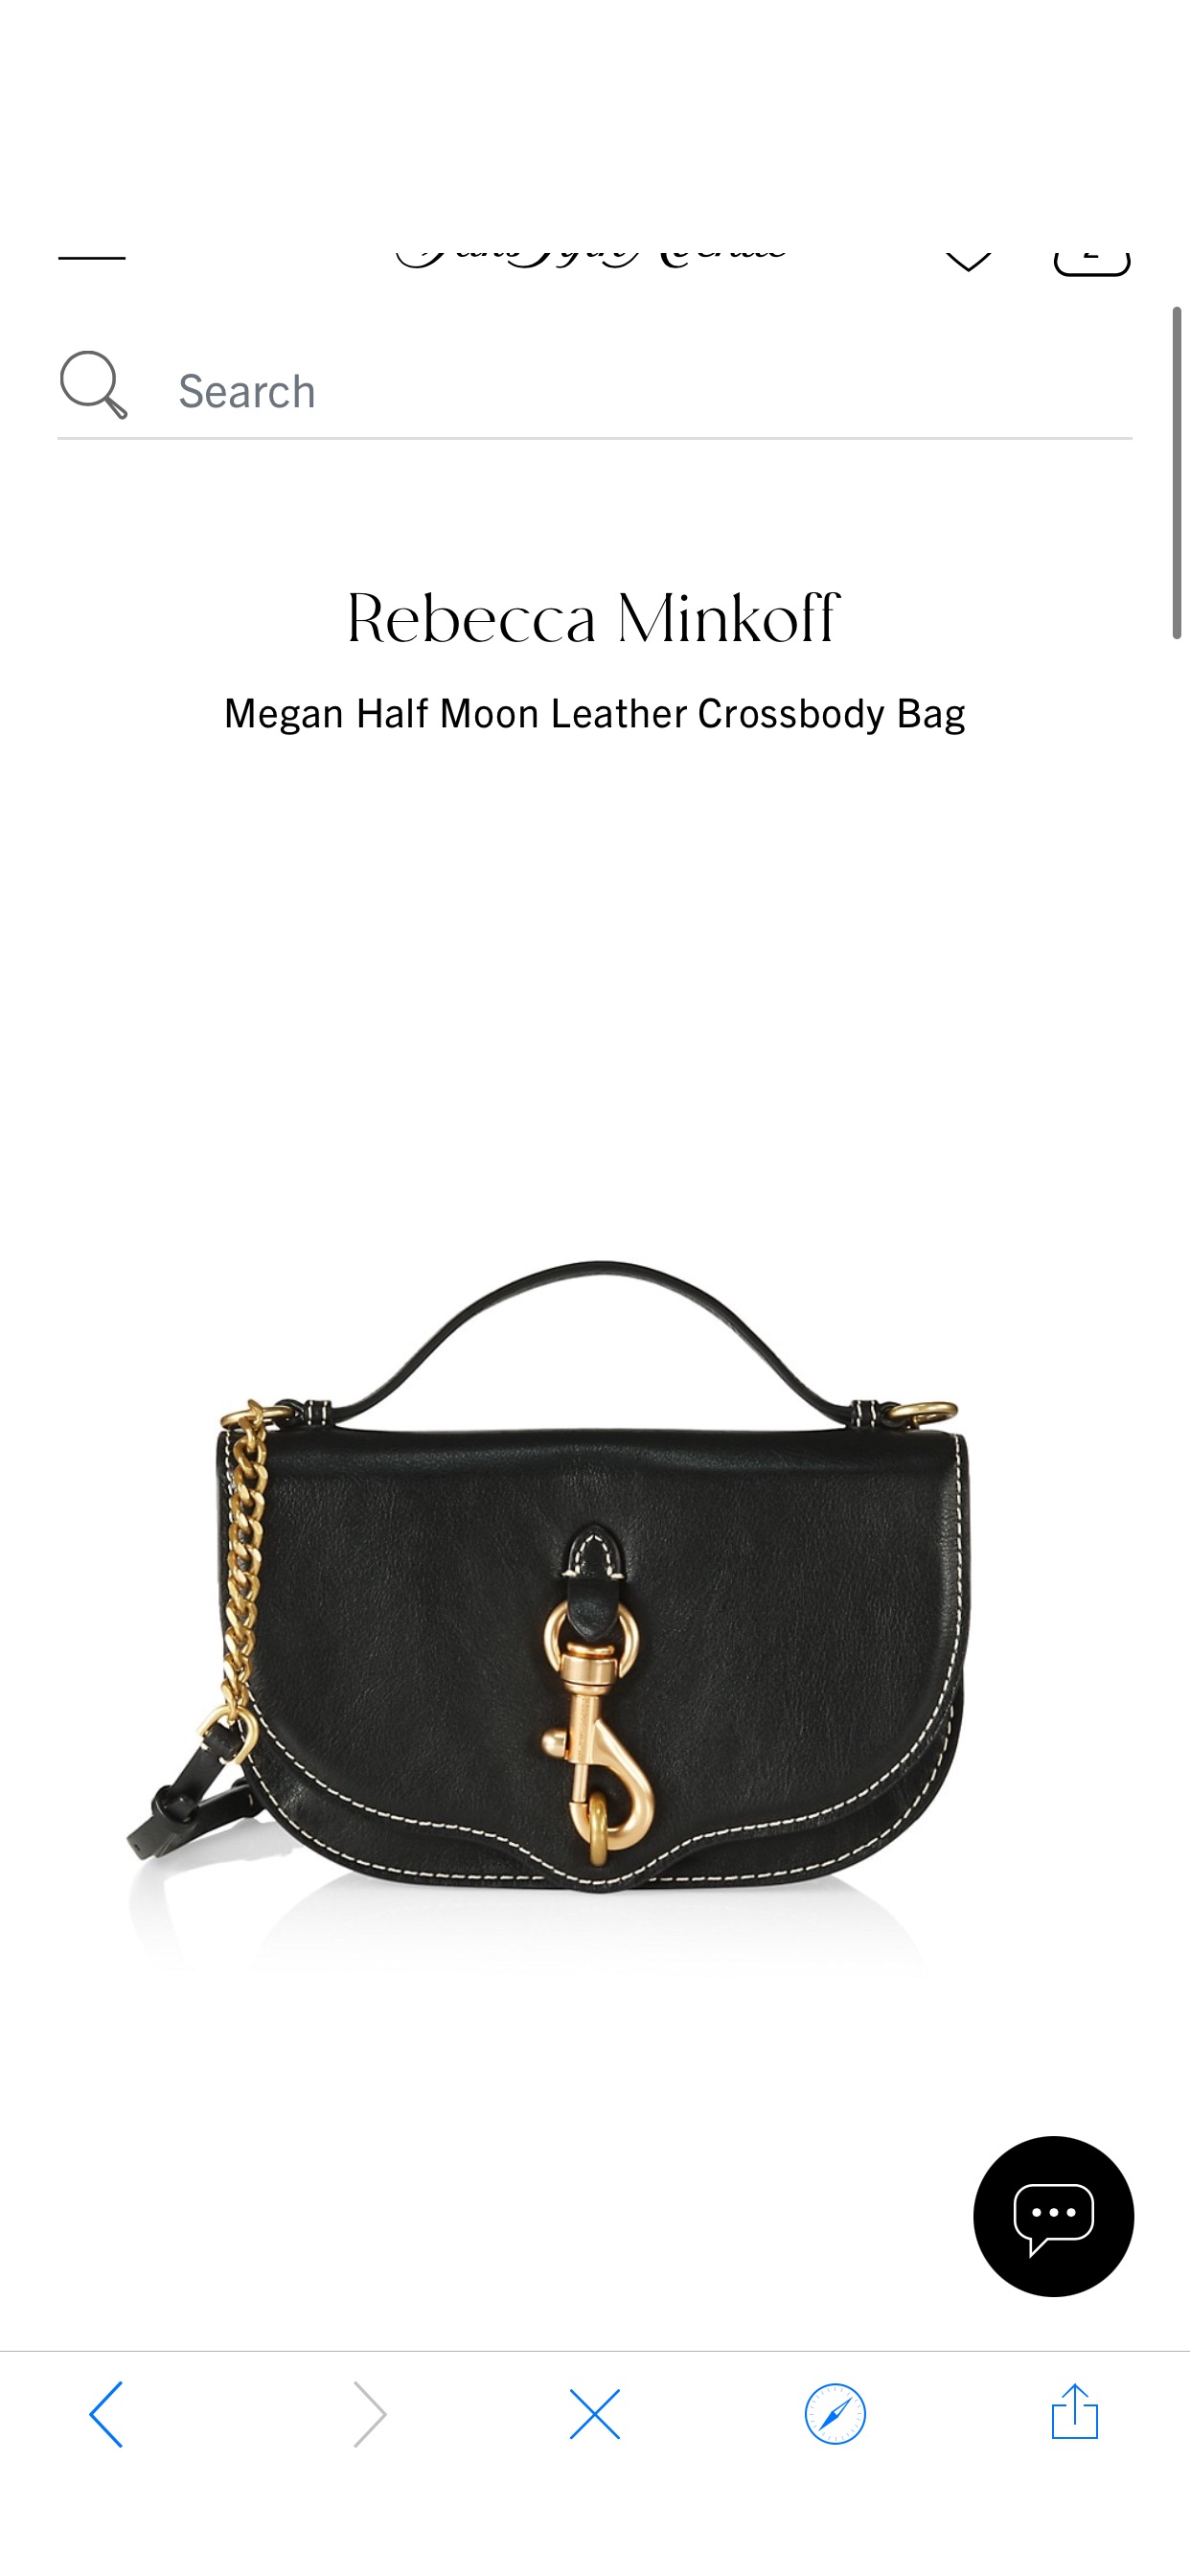 Shop Rebecca Minkoff Megan Half Moon Leather Crossbody Bag | Saks Fifth Avenue